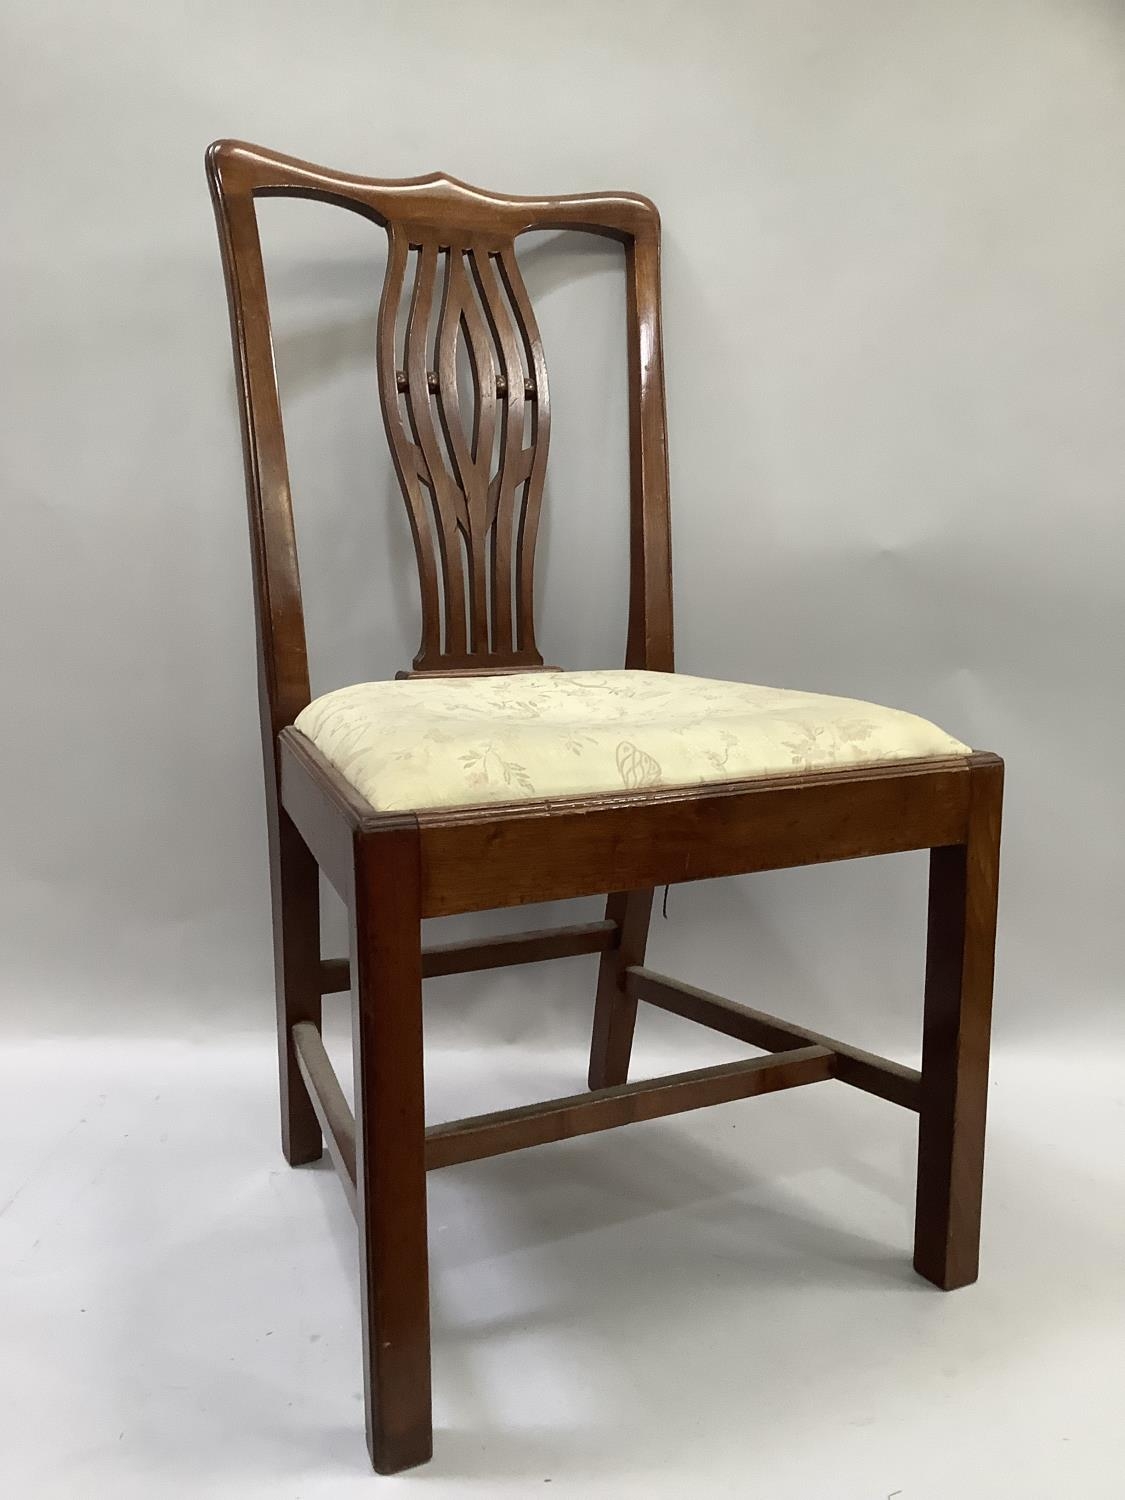 A mahogany splat back Georgian chair, on square legs, cream upholstered fabric